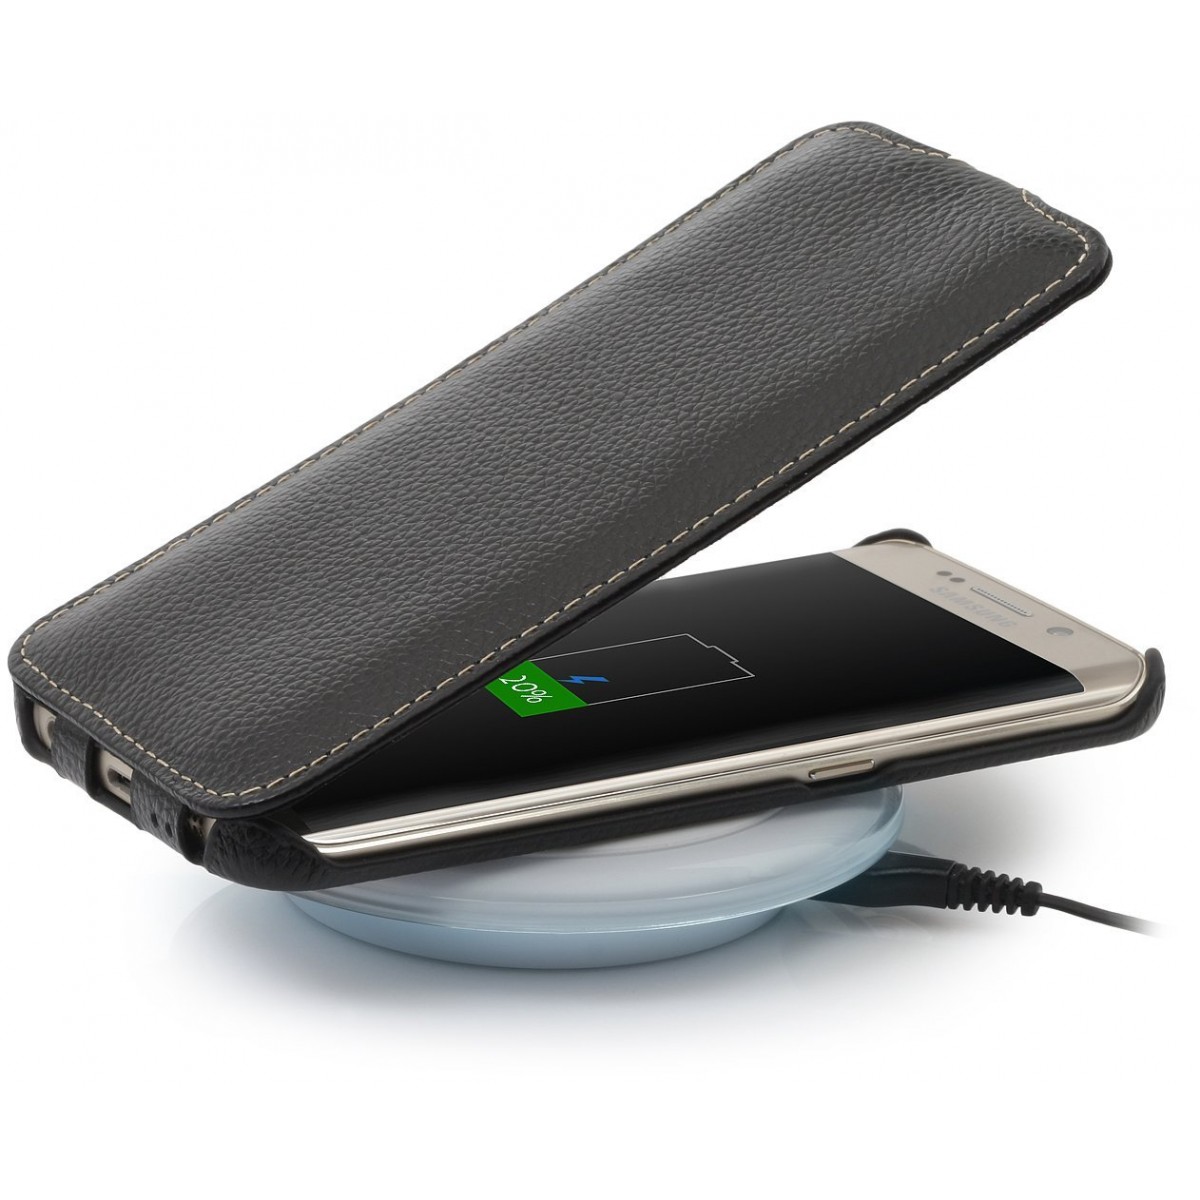 Samsung Galaxy S6 Edge en cuir véritable noir, UltraSlim